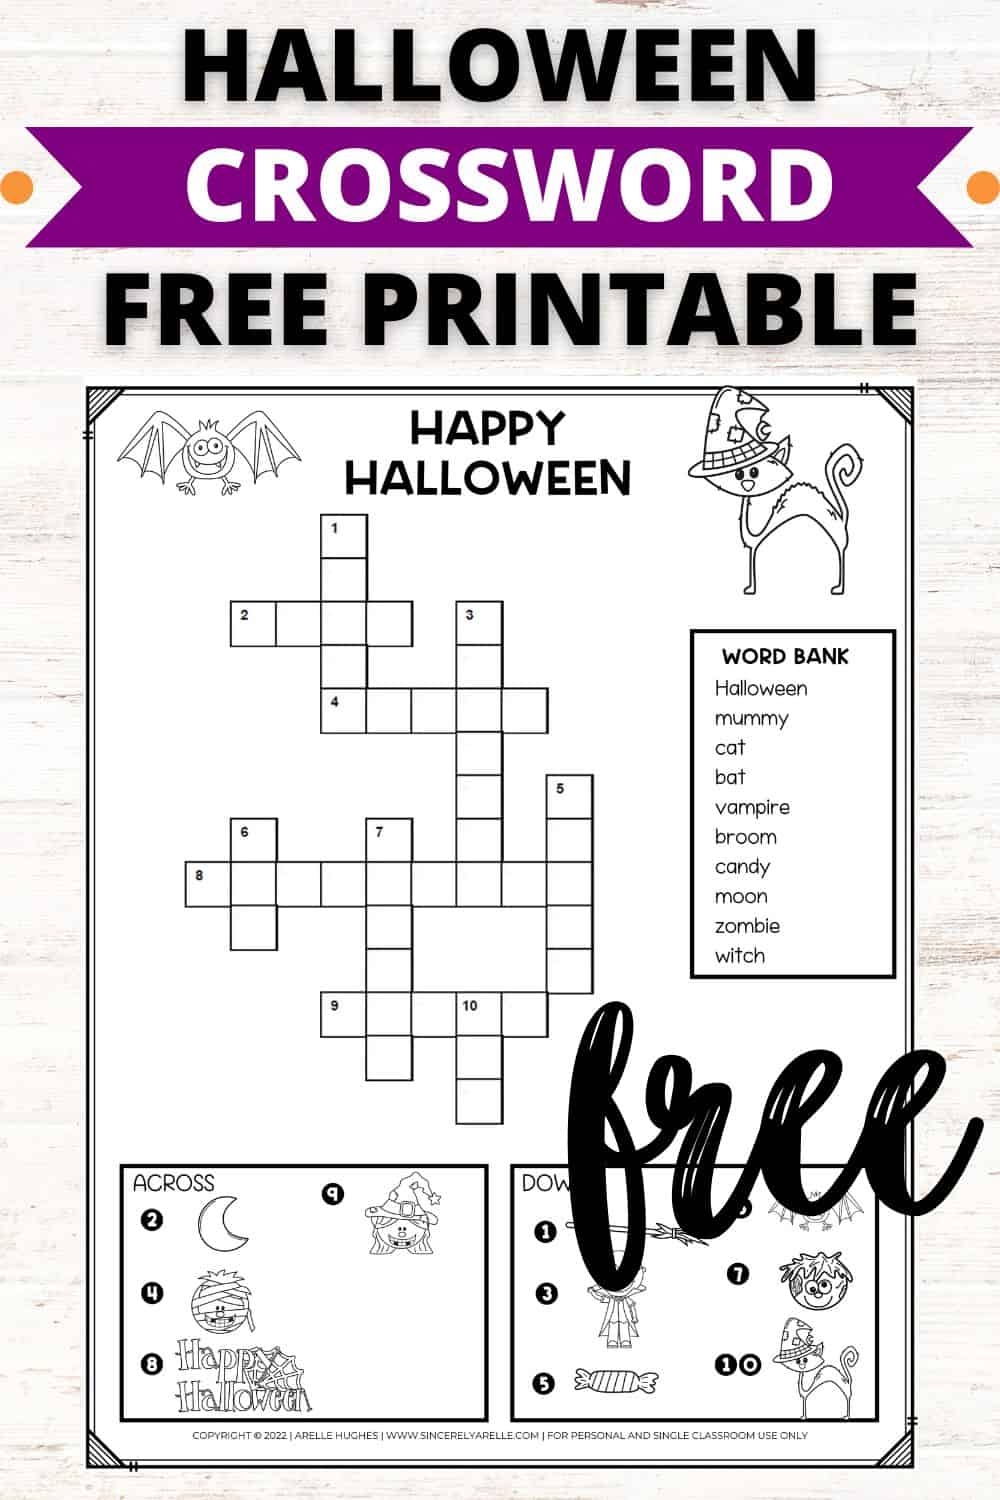 Free Printable Happy Halloween Crossword Puzzle For Kids Smart Cookie Printables - Free Easy Printable Crossword Puzzles For Kids